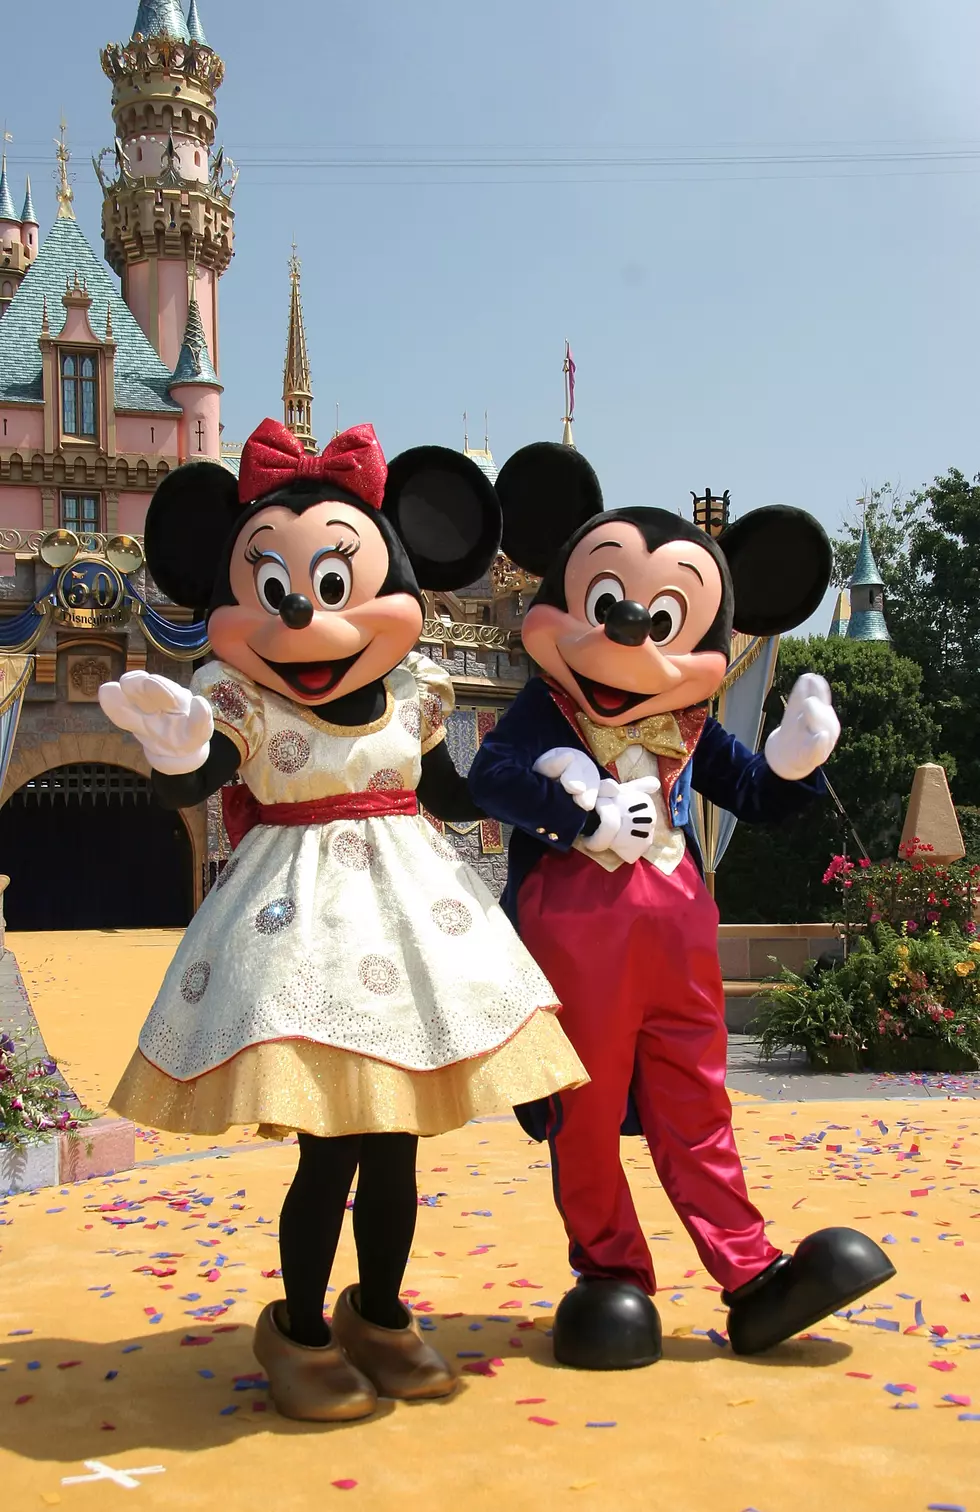 The Original &#8220;Magic Kingdom&#8221; Disneyland Celebrates 60 Years